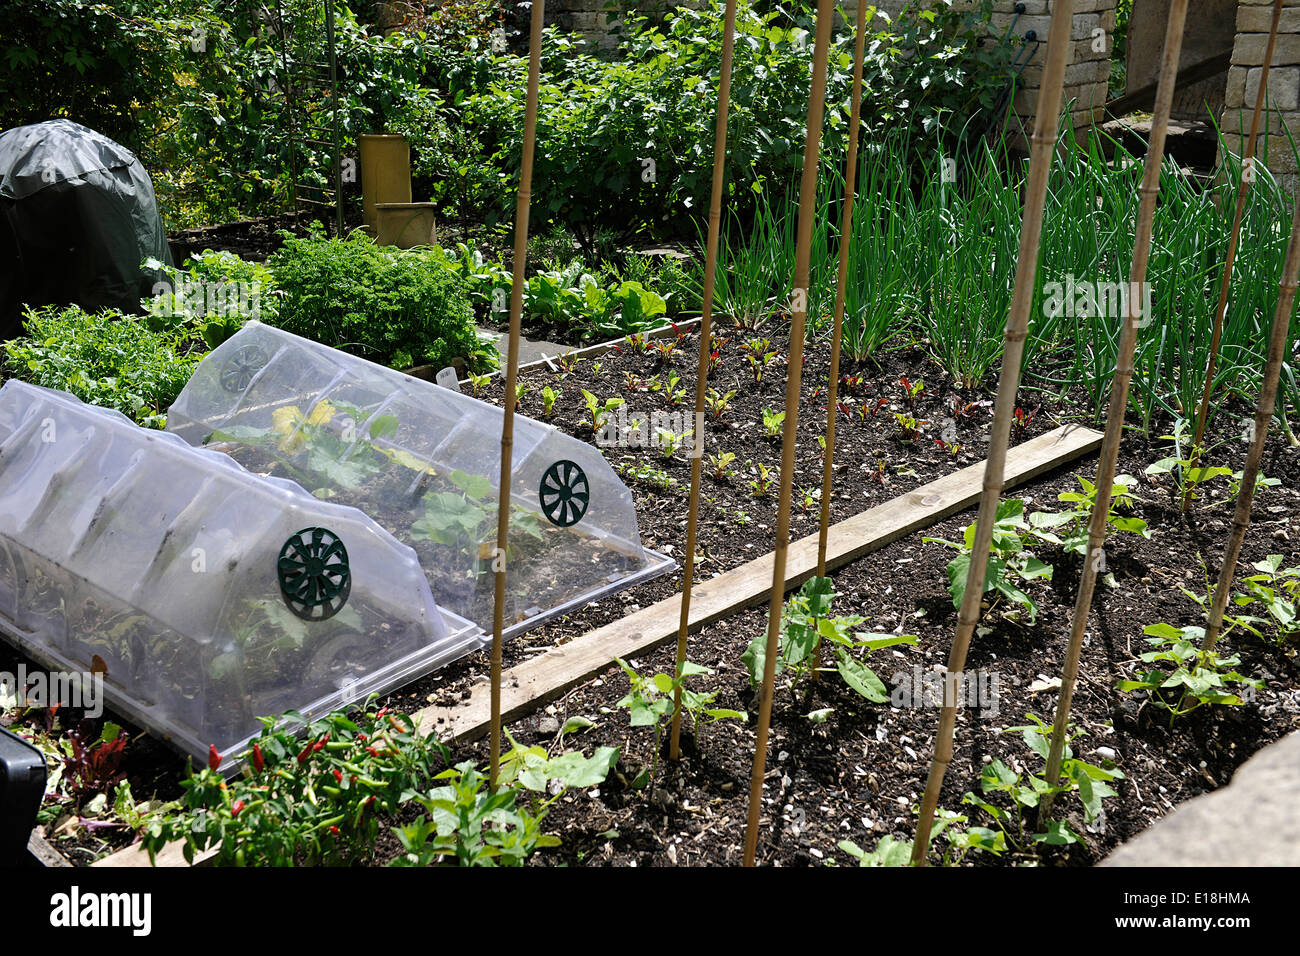 Cloches in vegetable garden plots in gardens of Bradford-on-Avon, Wiltshire, UK Stock Photo